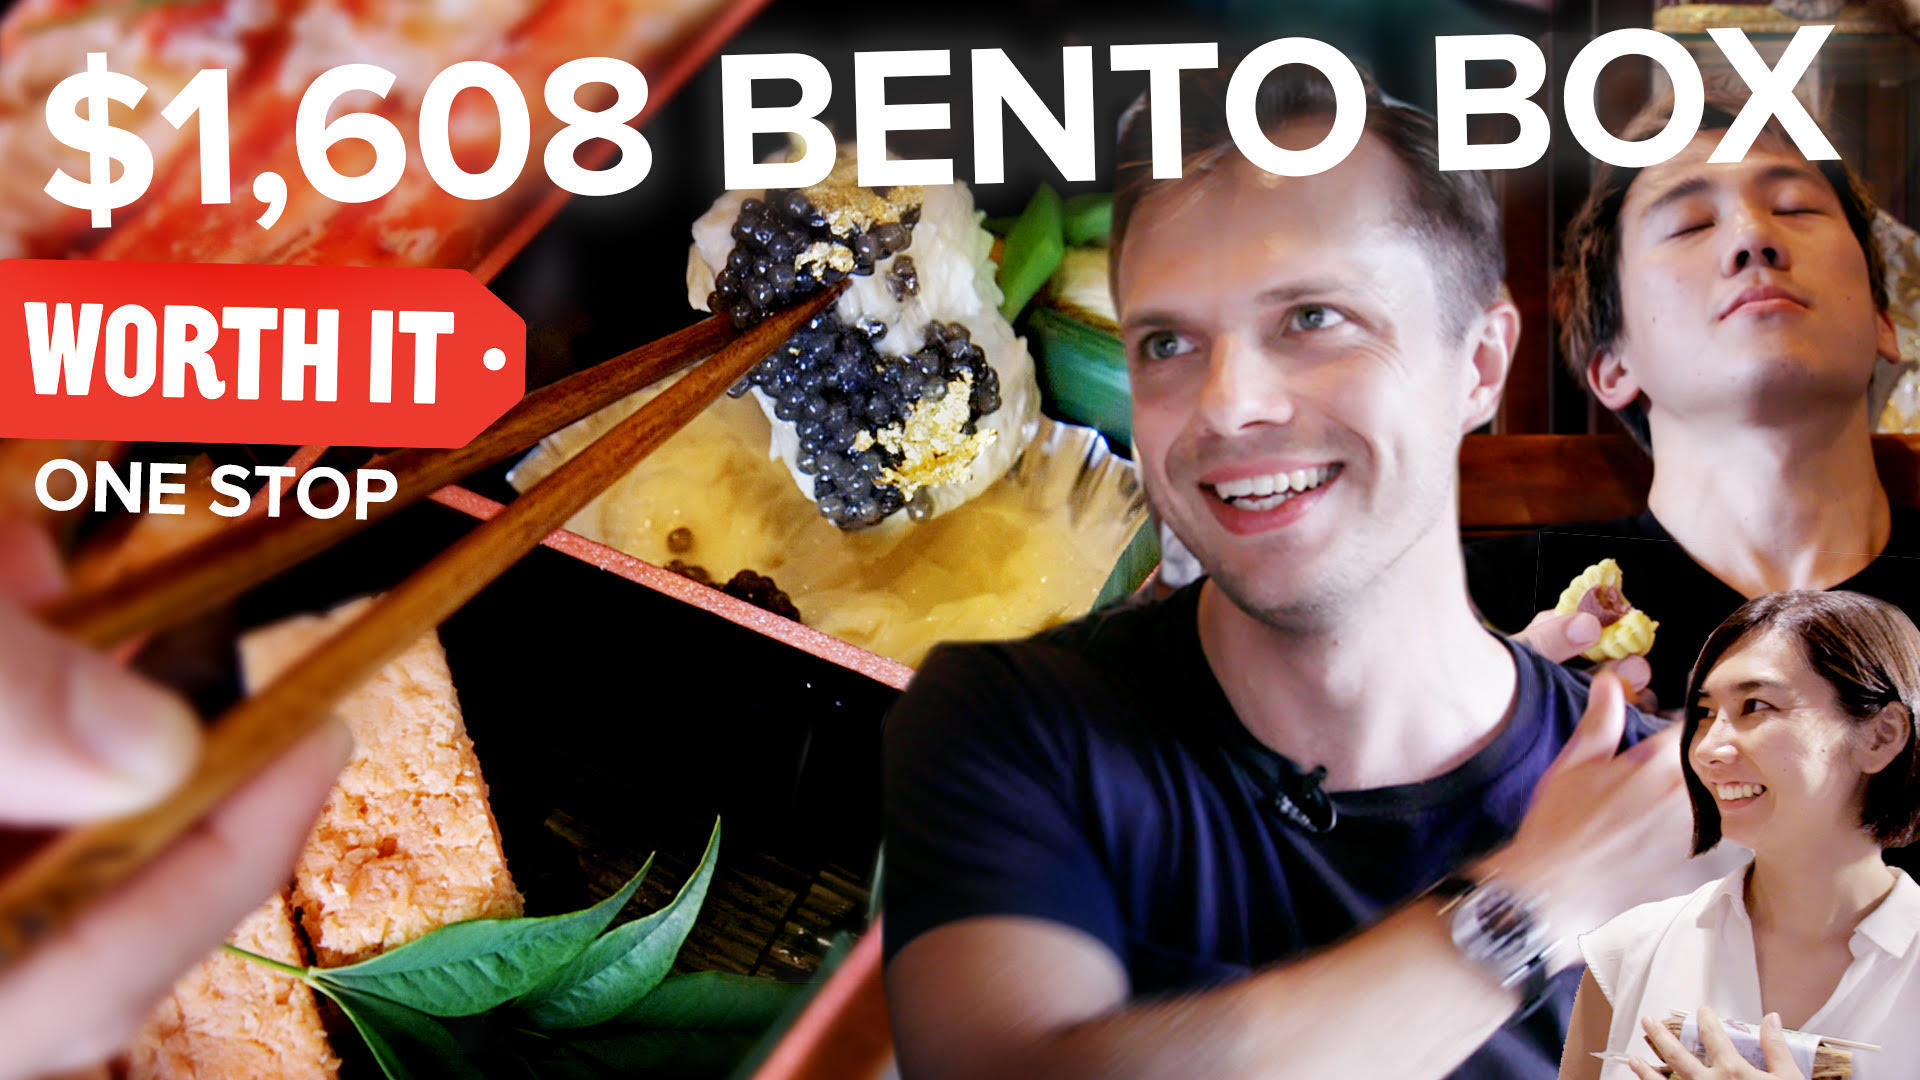 Japanese Inspired Bento Box - Gathering Dreams